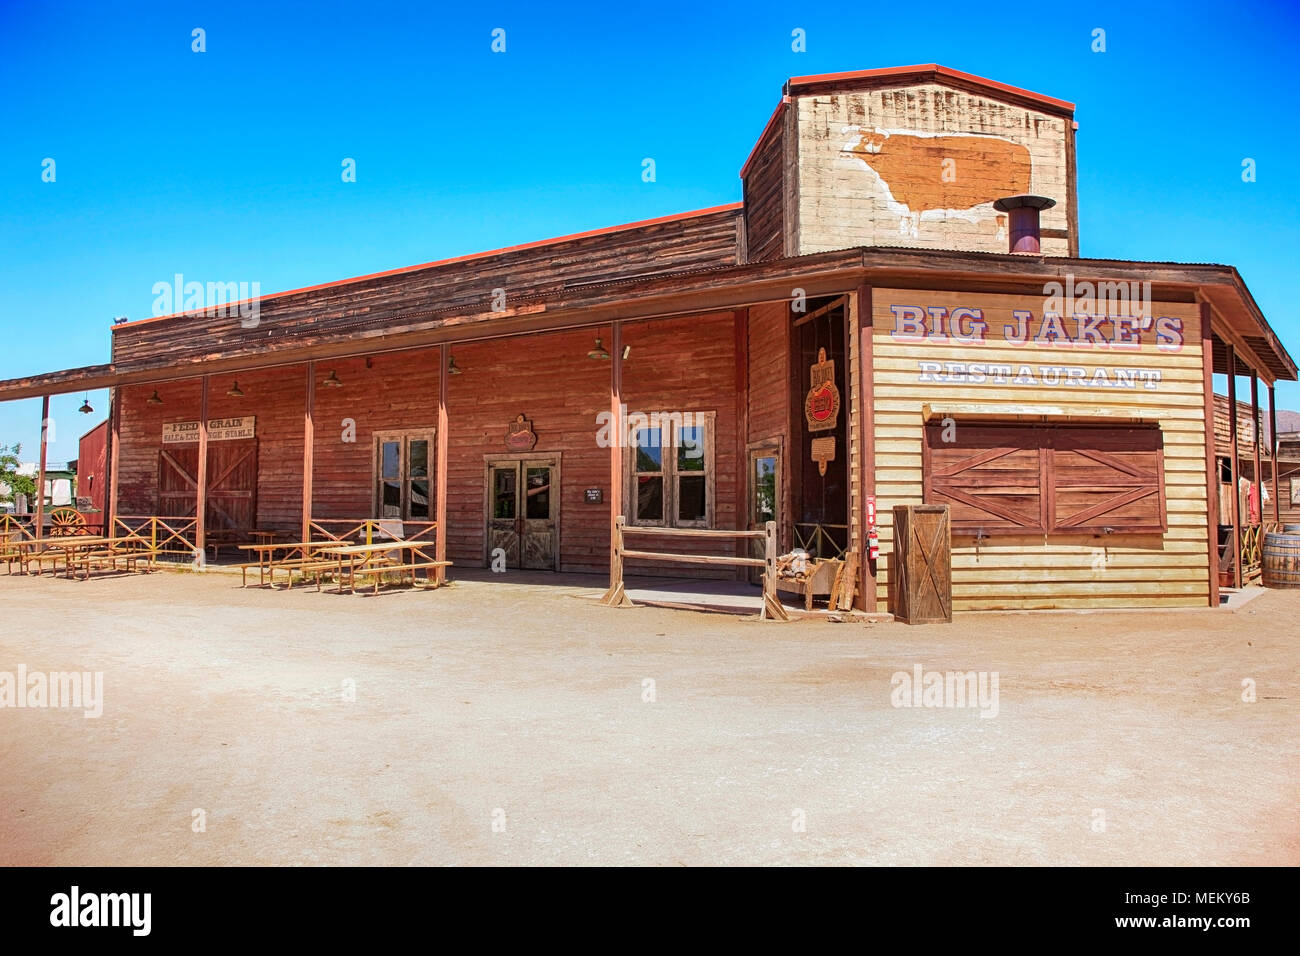 Big Jakes Saloon Restaurant at the Old Tucson Film Studios amusement park in Arizona Stock Photo